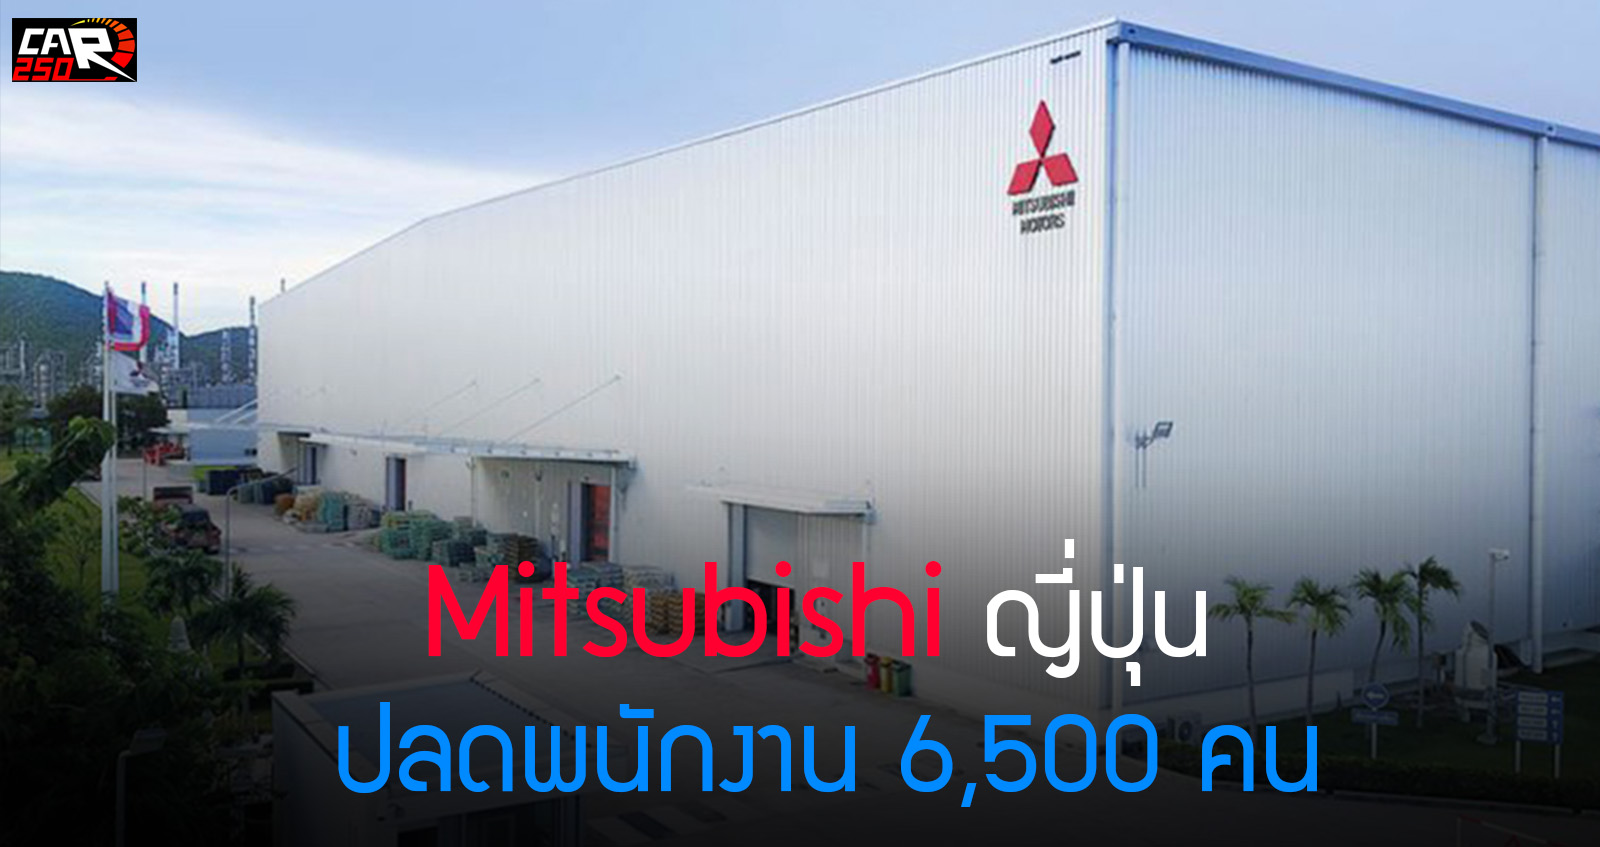 Mitsubishi ญี่ปุ่น ปลดพนักงาน 6,500 คน เซ่นพิษ COVID-19